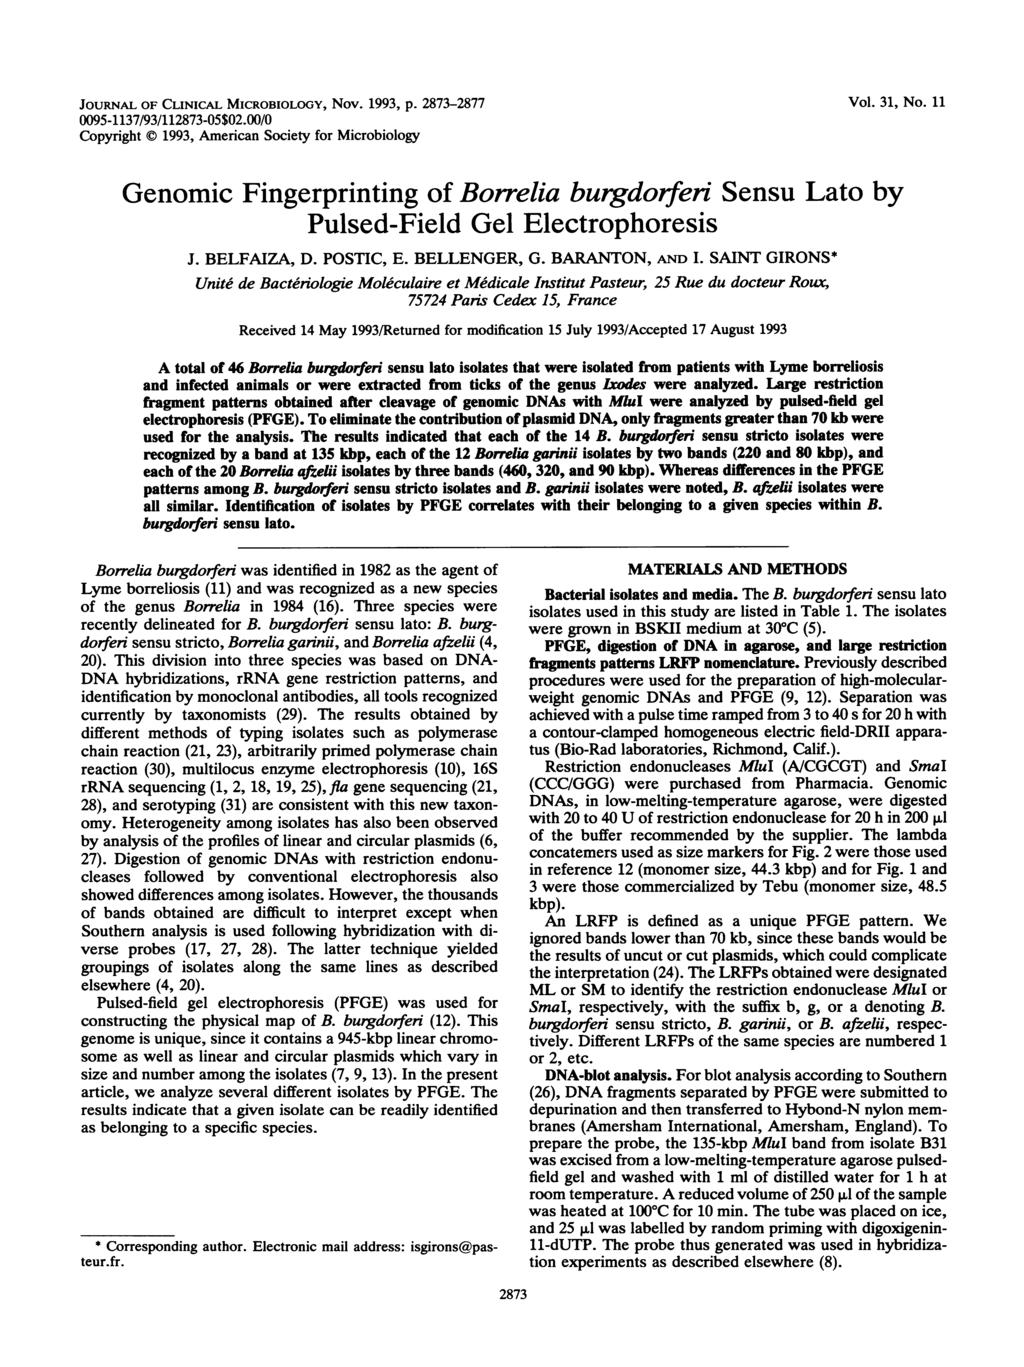 JOURNAL OF CLINICAL MICROBIOLOGY, Nov. 993, p. 873-877 Vol. 3, No. 0095-37/93/873-05$0.